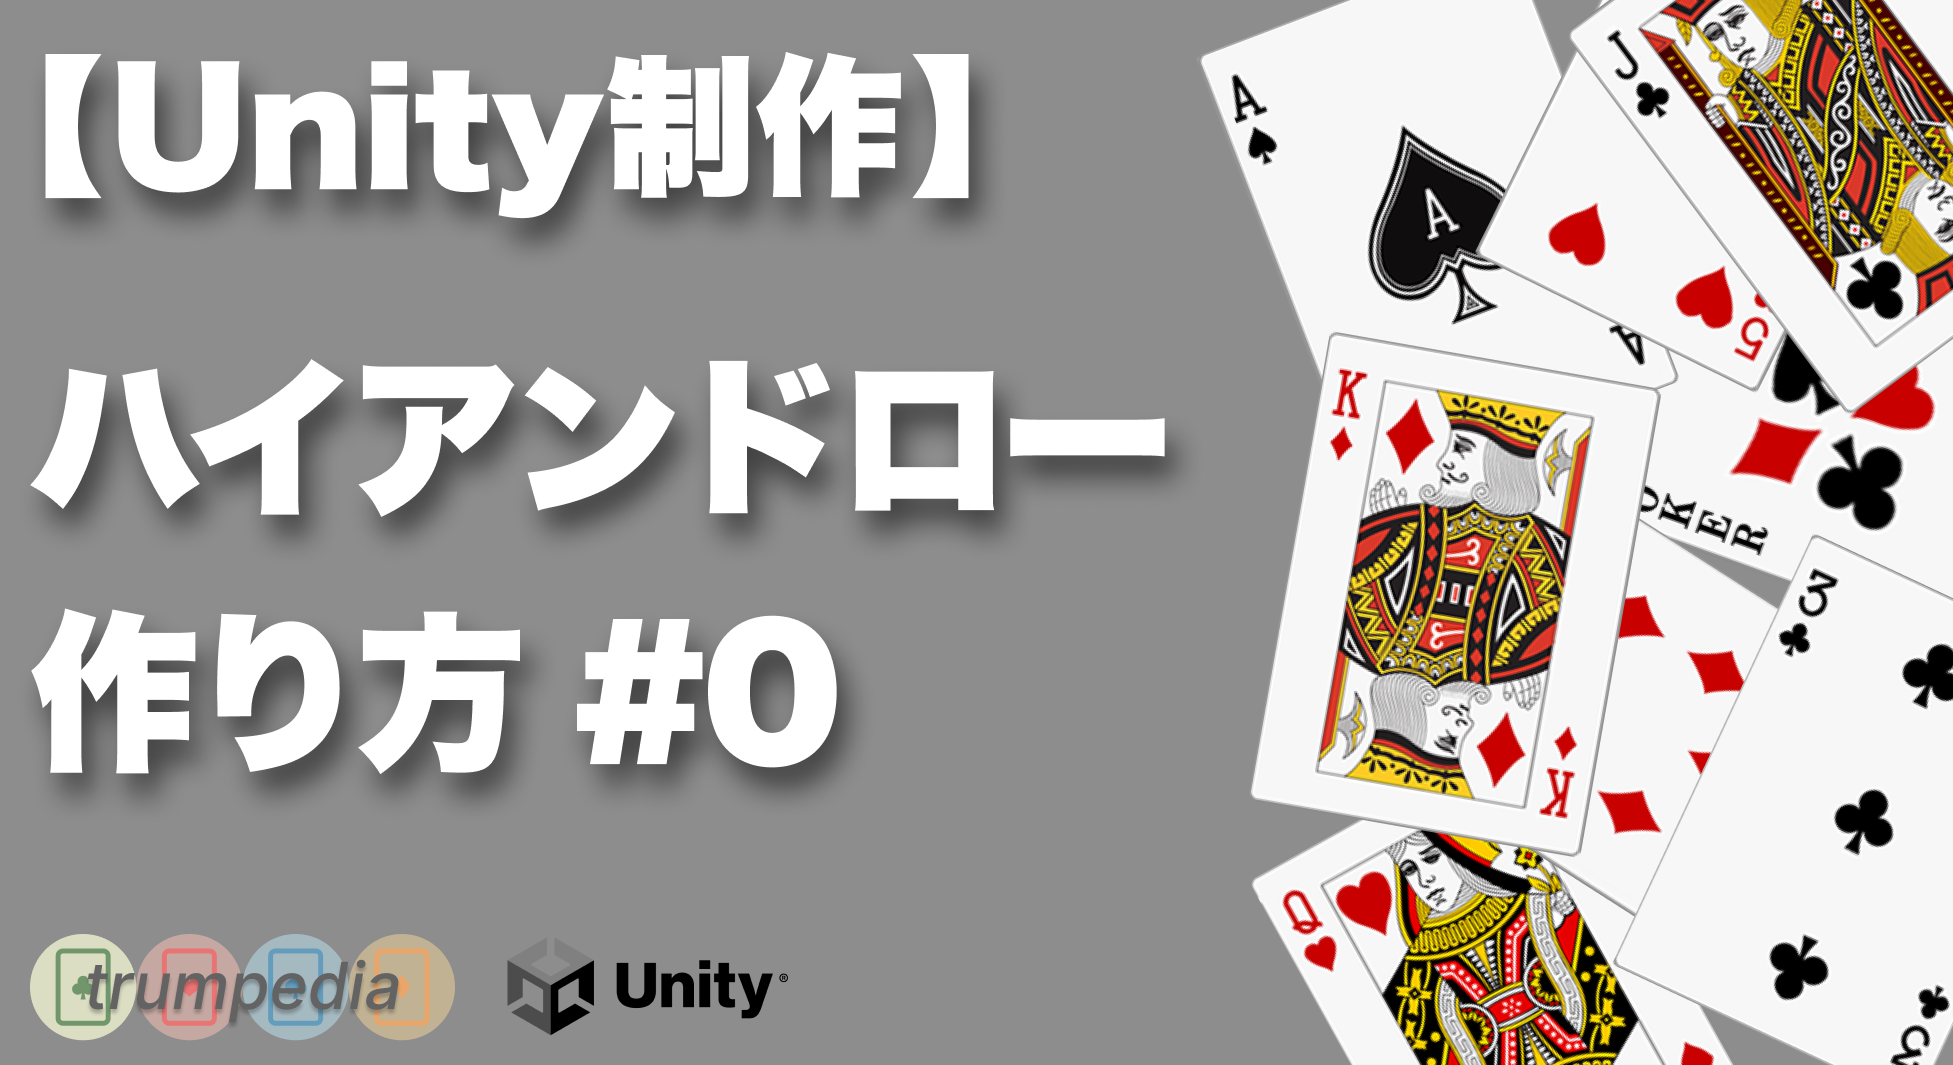 Unityゲーム制作 簡単なトランプカードゲーム制作 0 トランペディア